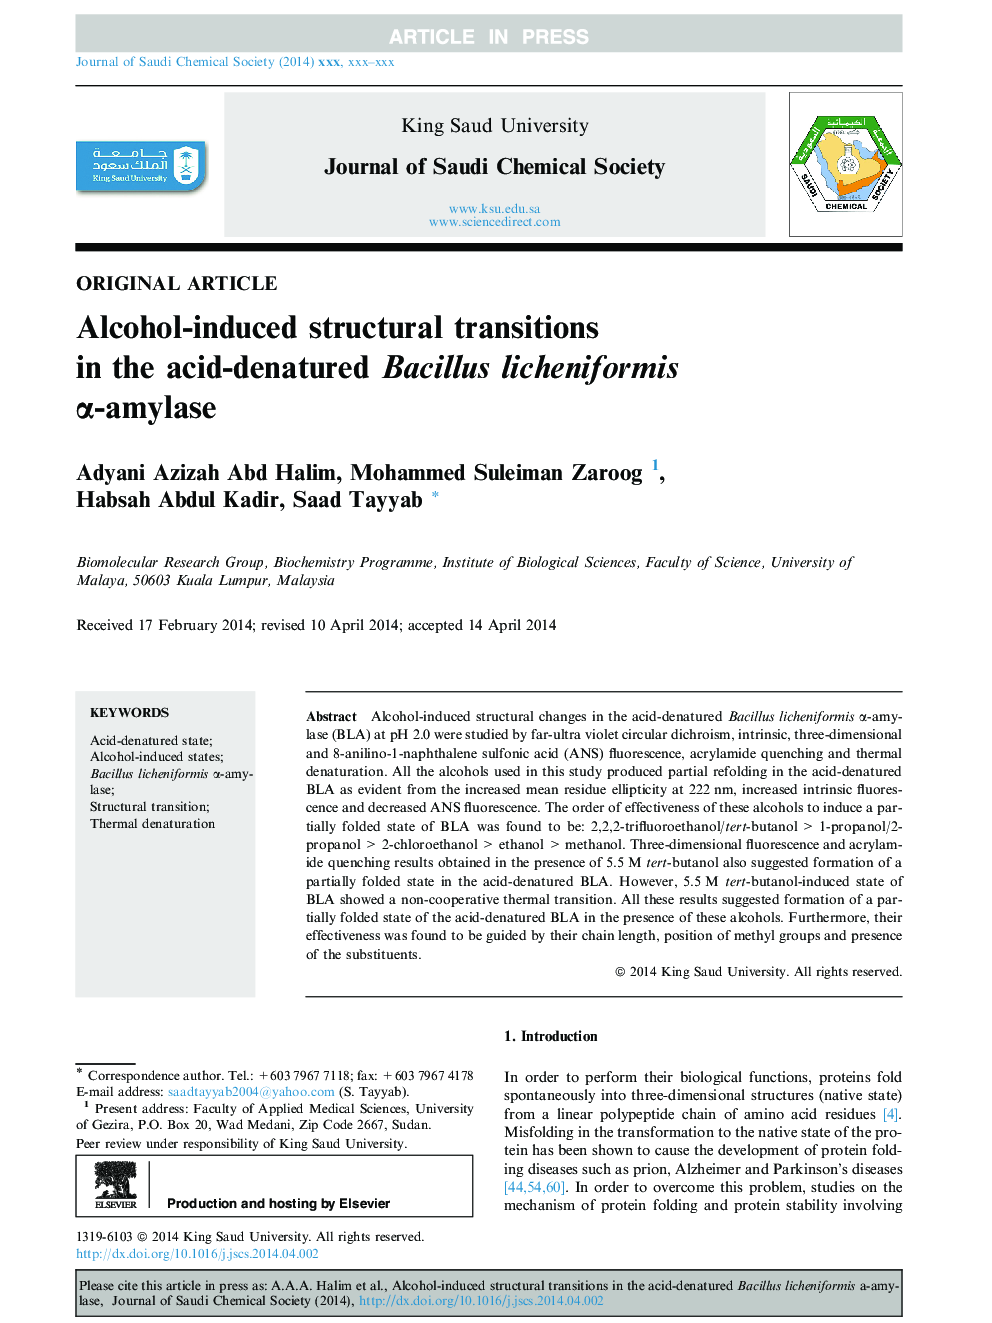 Alcohol-induced structural transitions in the acid-denatured Bacillus licheniformis Î±-amylase